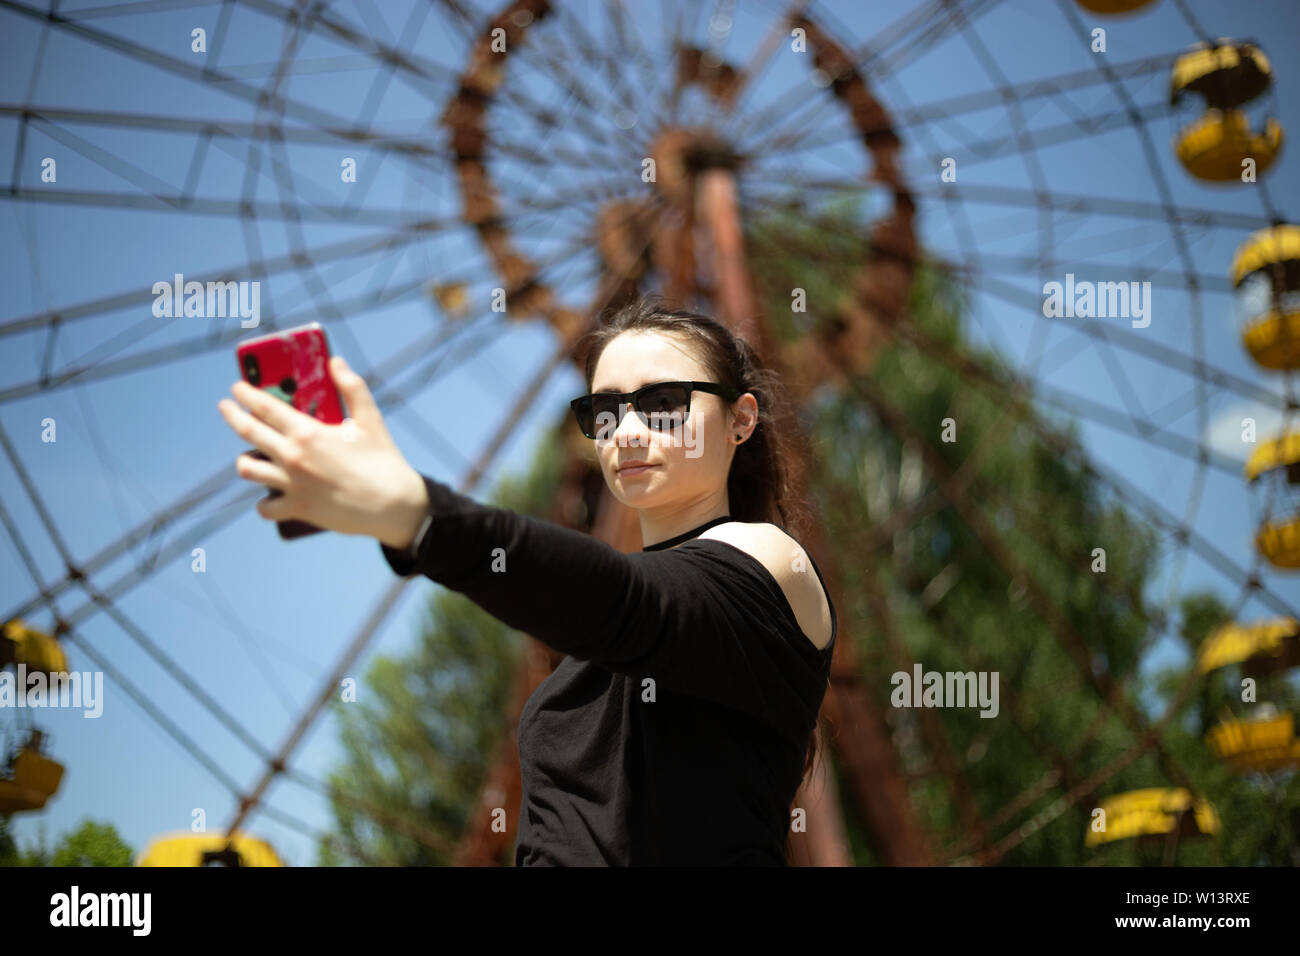 Girl taking selfie in Pripyat amusement park on the ferris wheel background Stock Photo